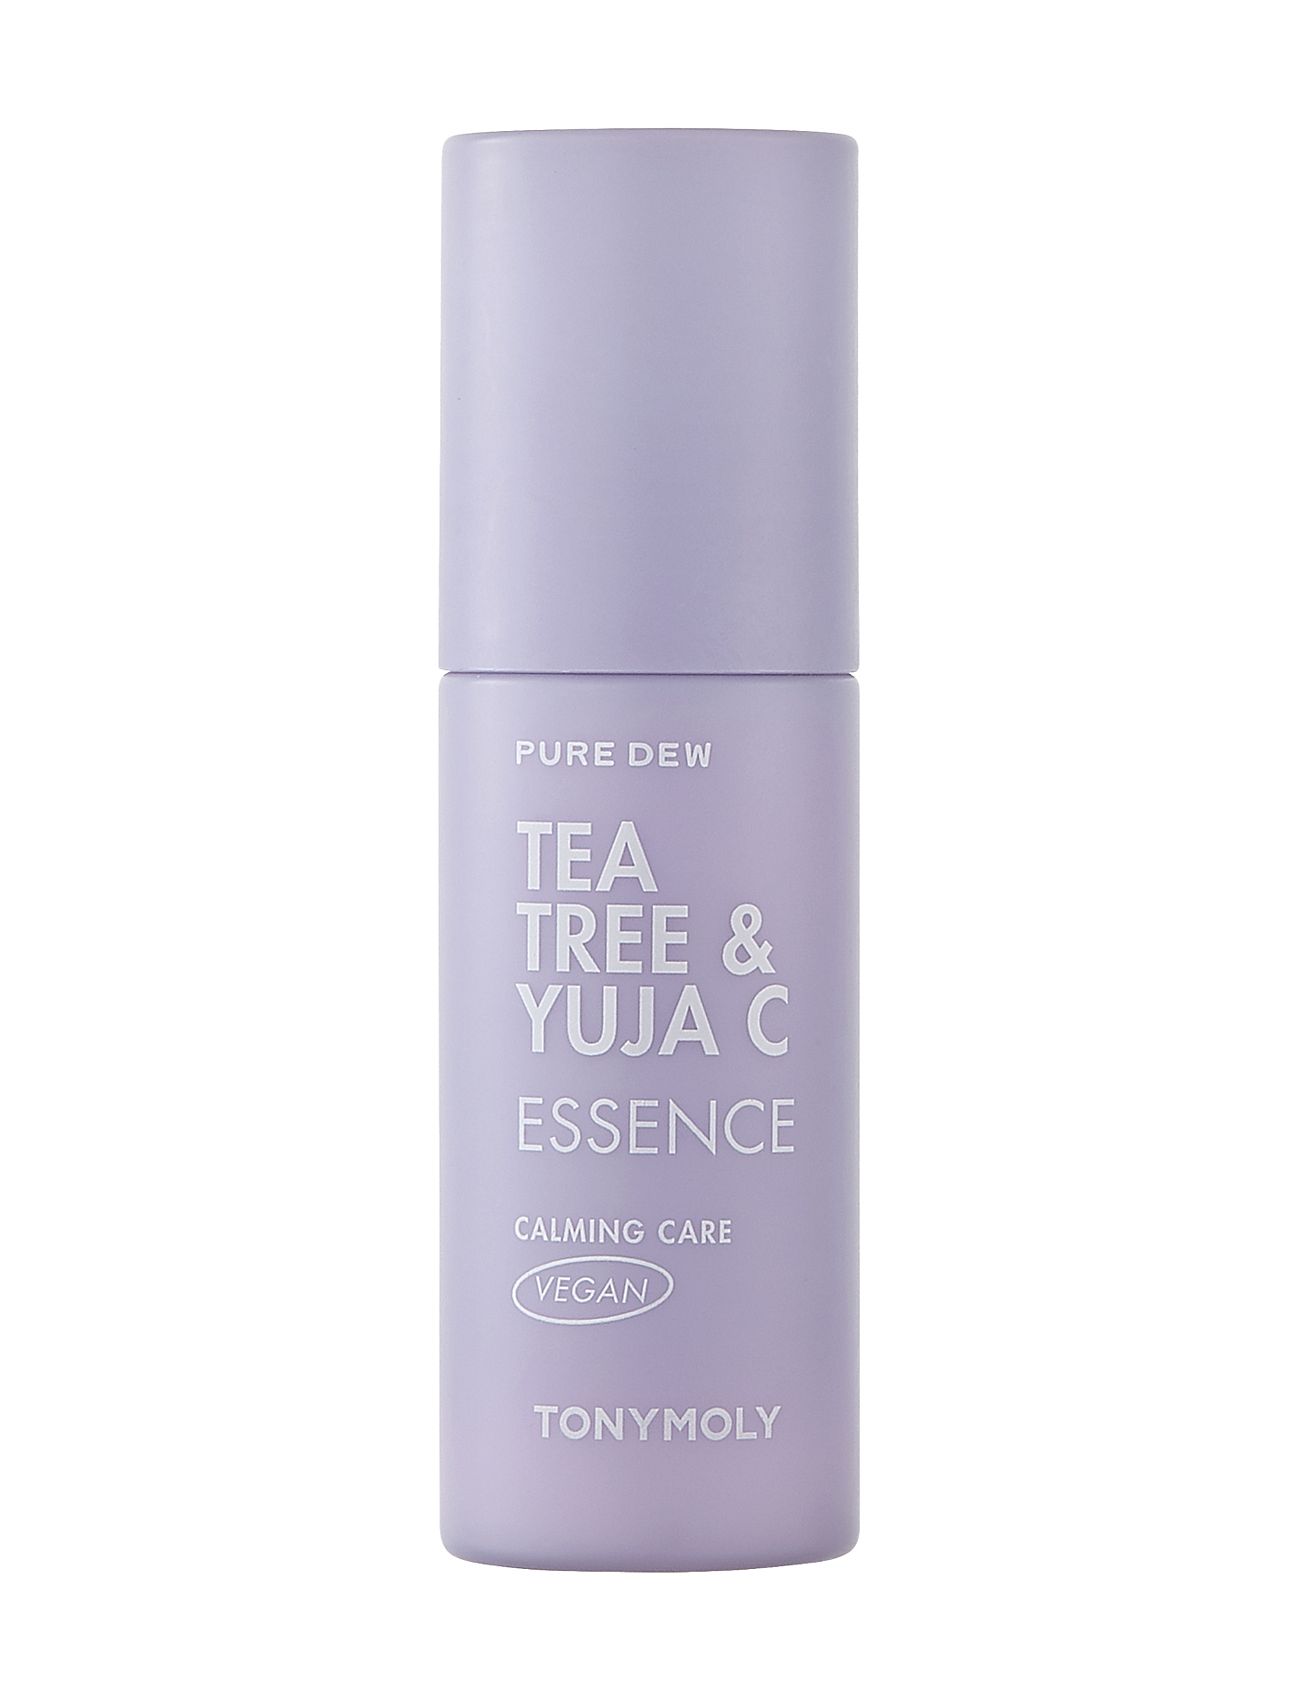 Tonymoly Pure Dew Tea Tree & Yuja C Calming Essence 50Ml Beauty Women Skin Care Face T Rs Essence Nude Tonymoly